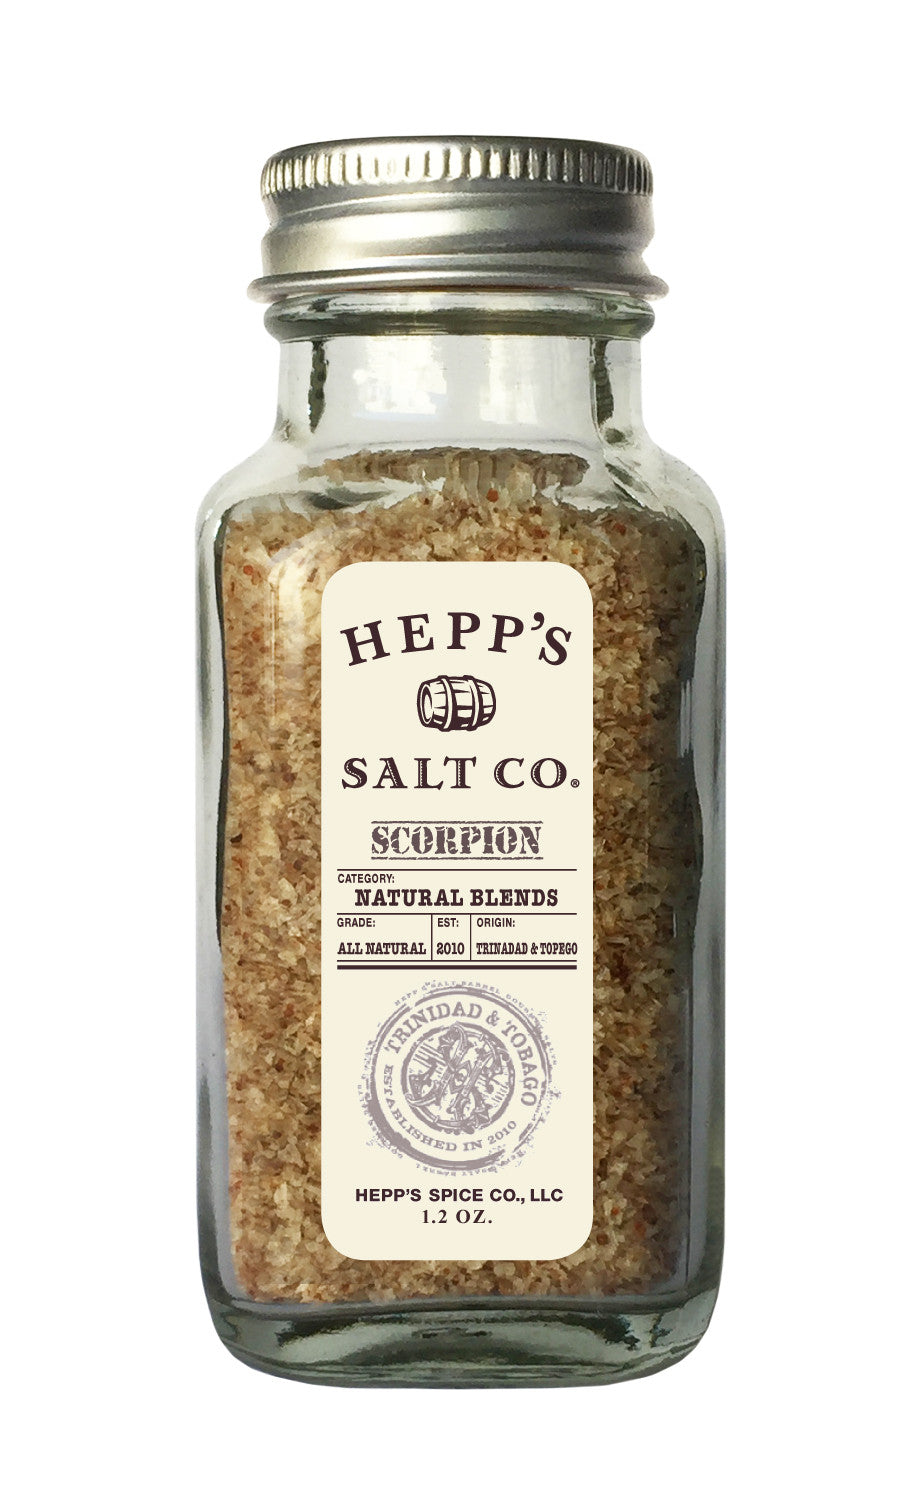 Scorpion Sea Salt - HEPPS SALT CO. 